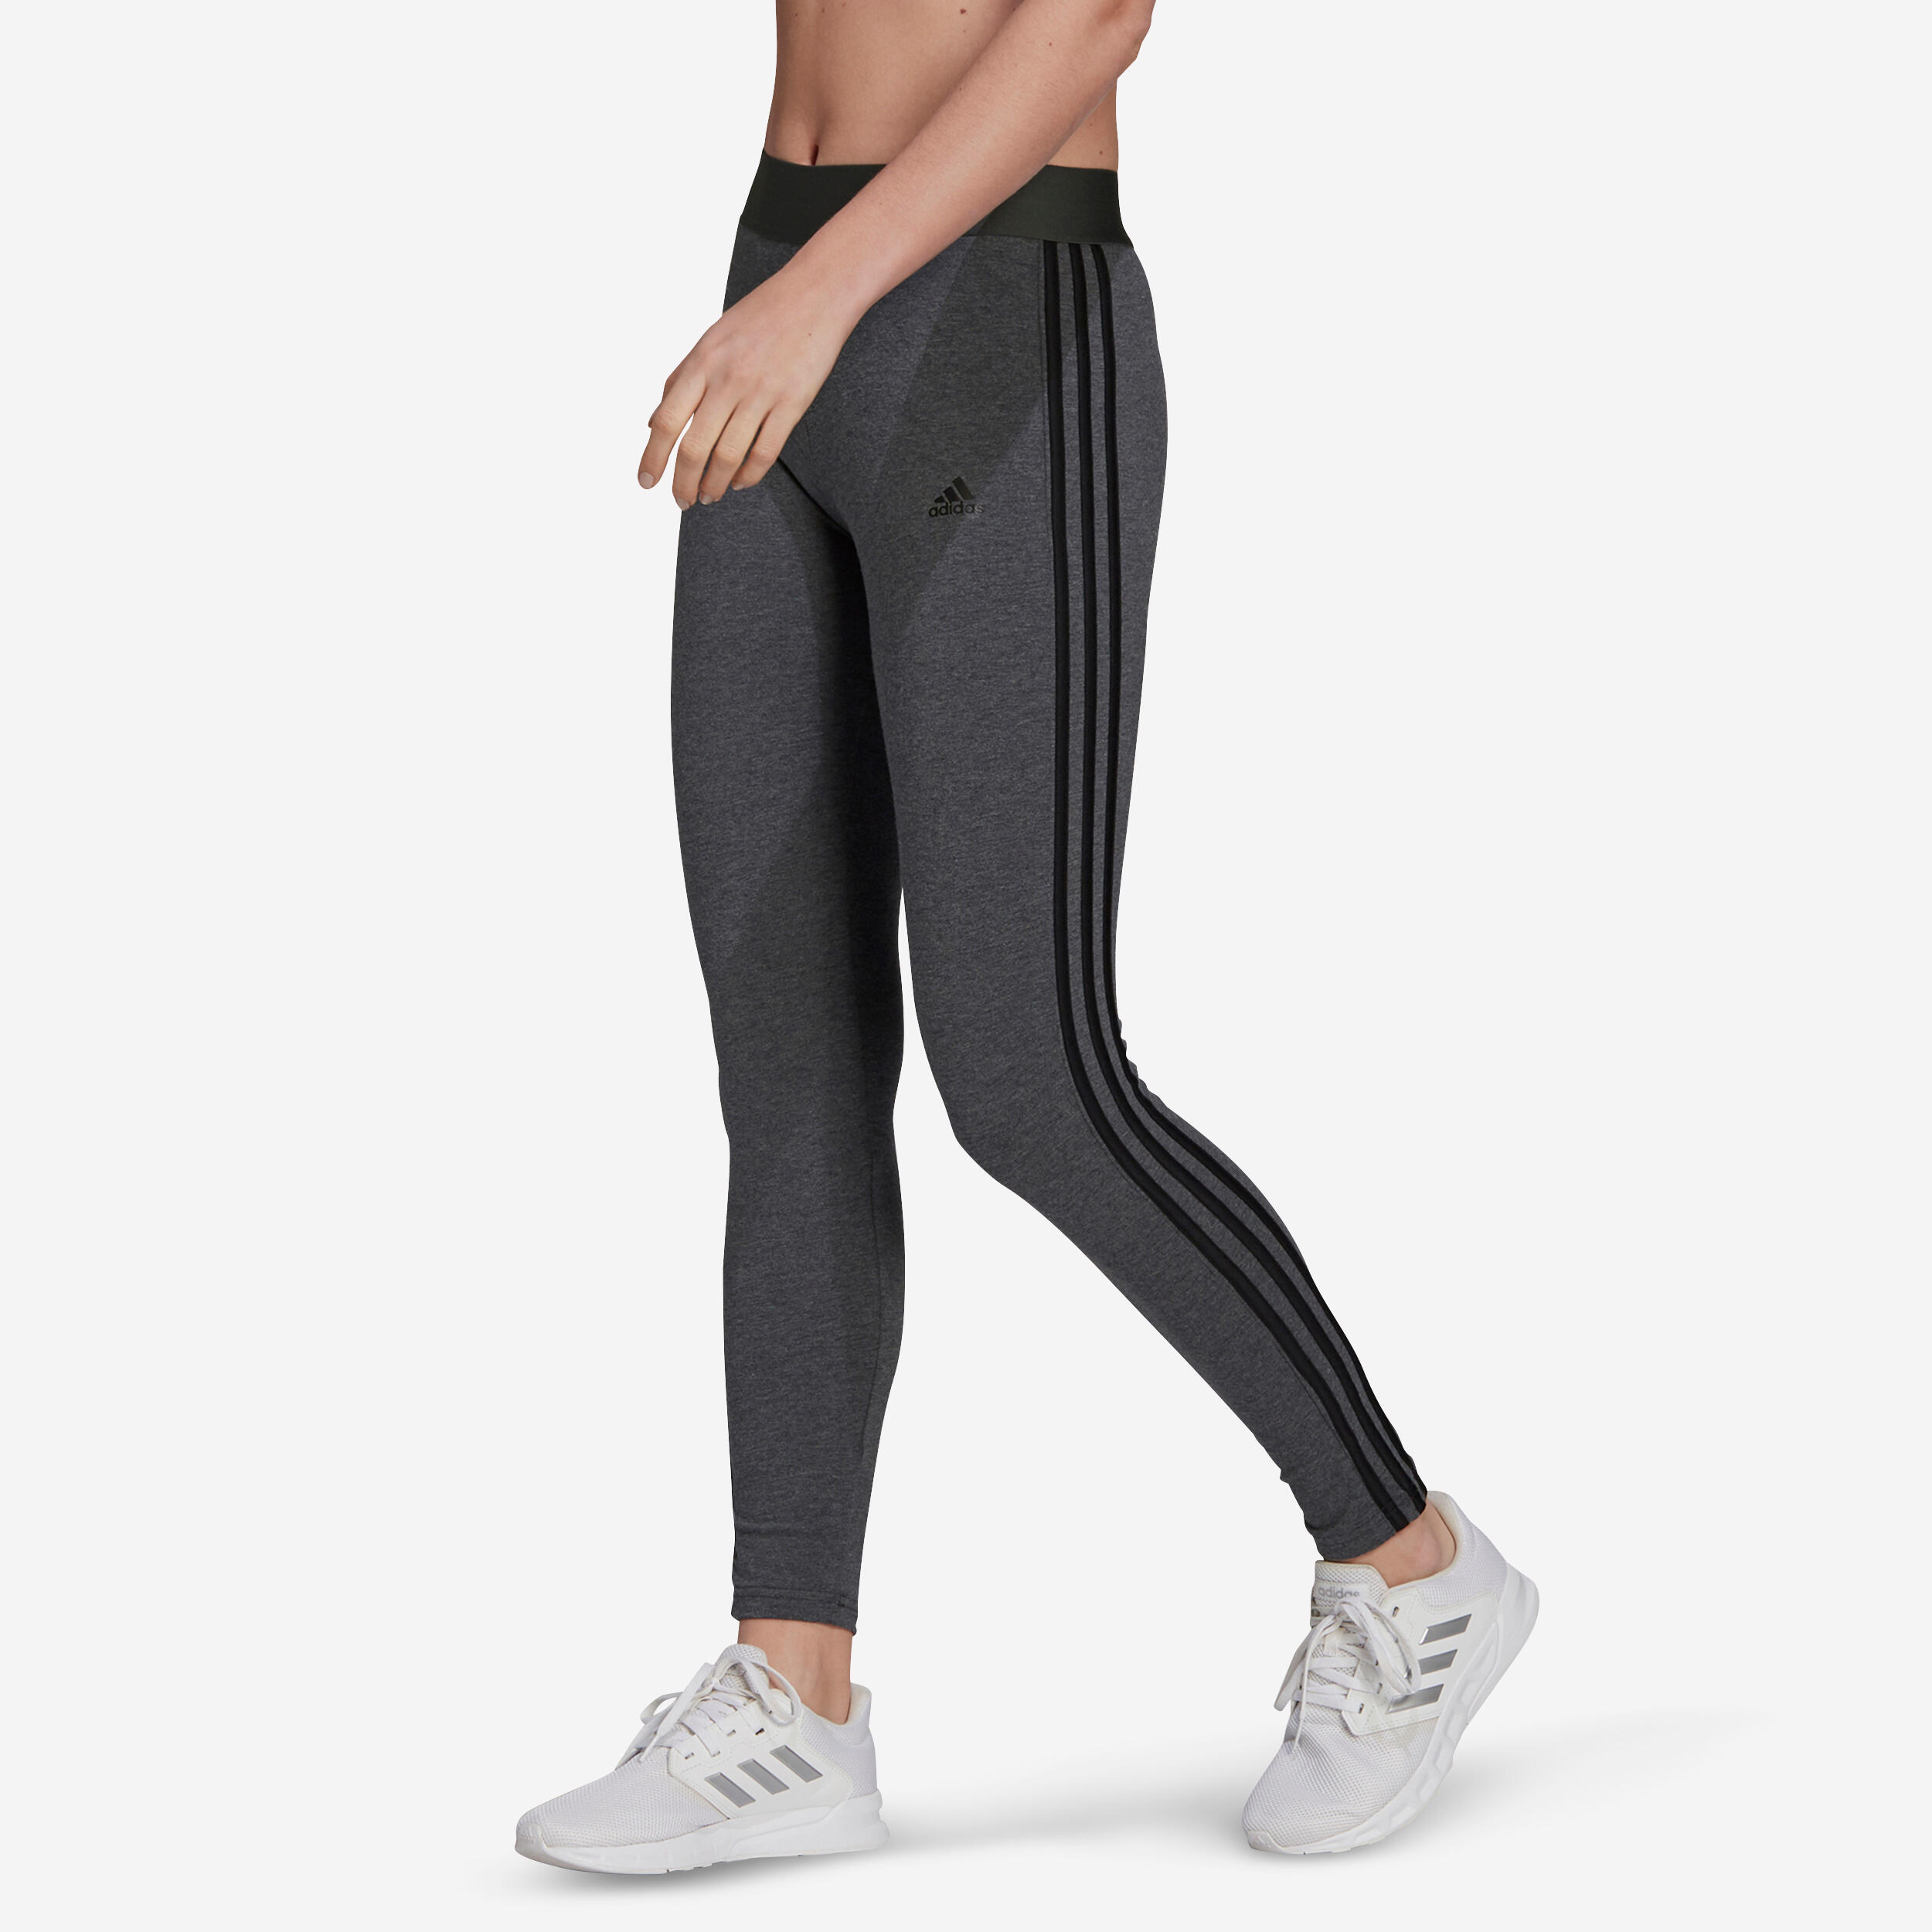 Decathlon | Leggings donna fitness ADIDAS 3 stripes cotone leggero grigi scuri |  Adidas